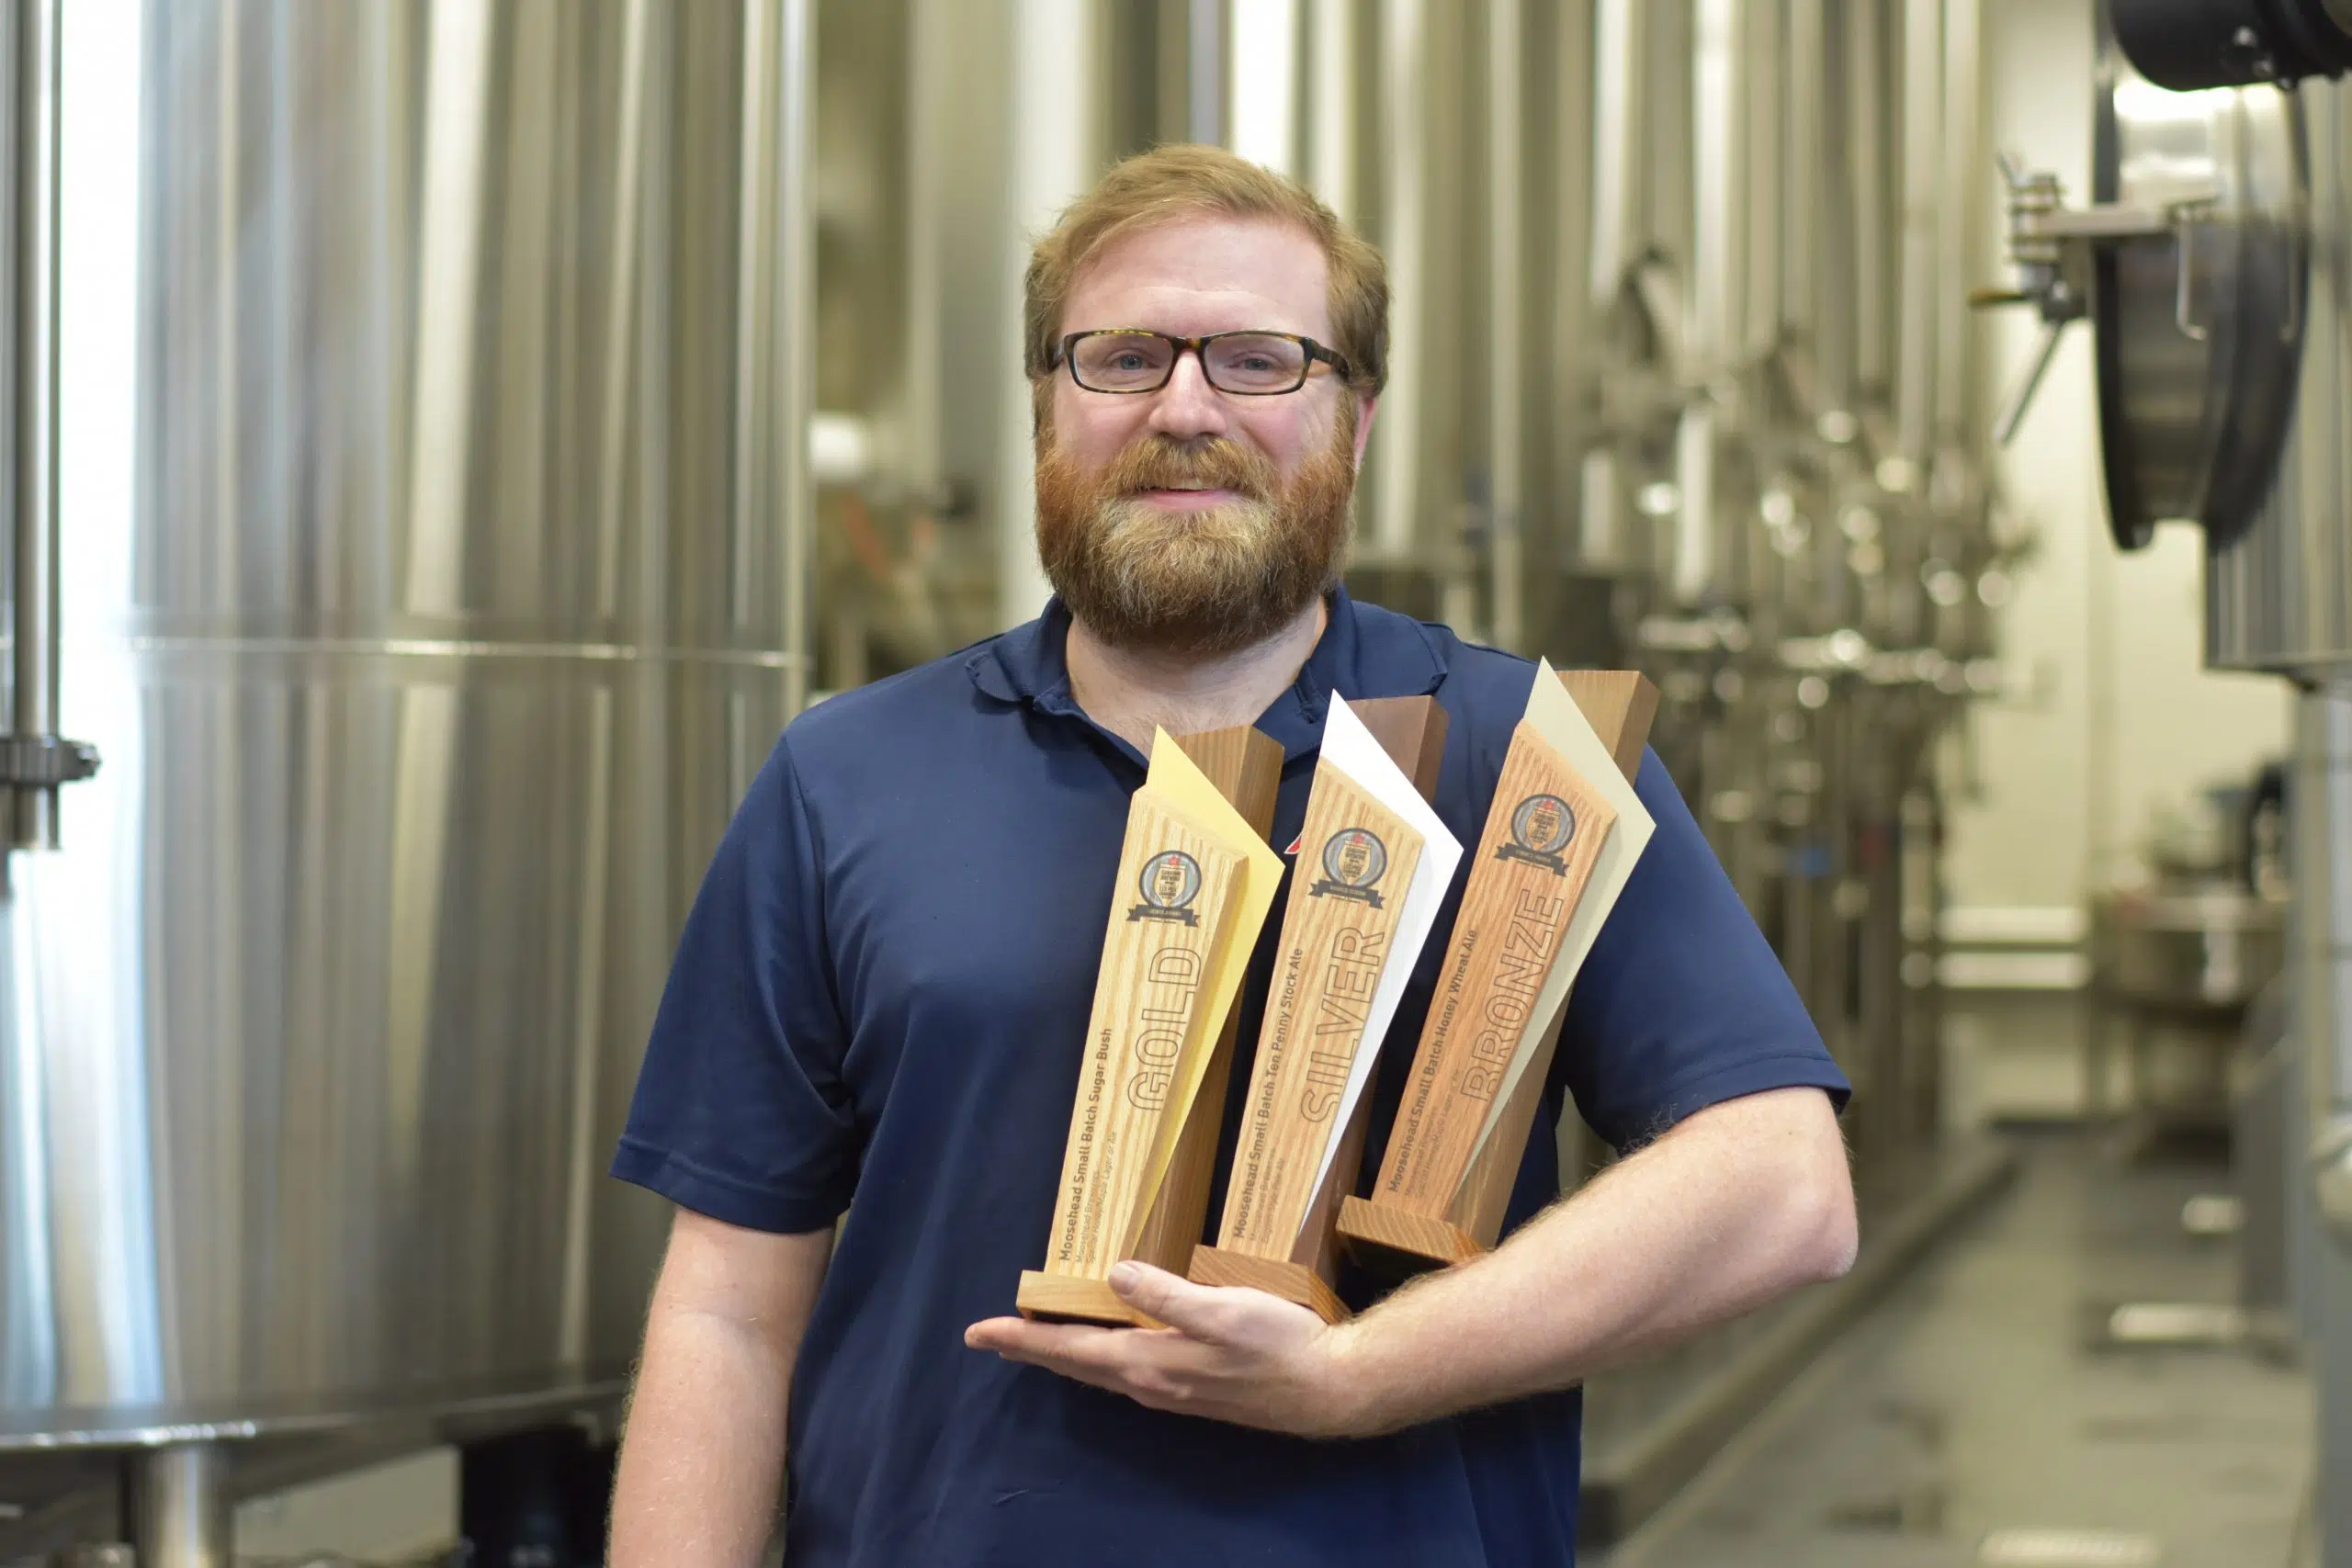 Moosehead's Small-Batch Brewery Wins Three Awards